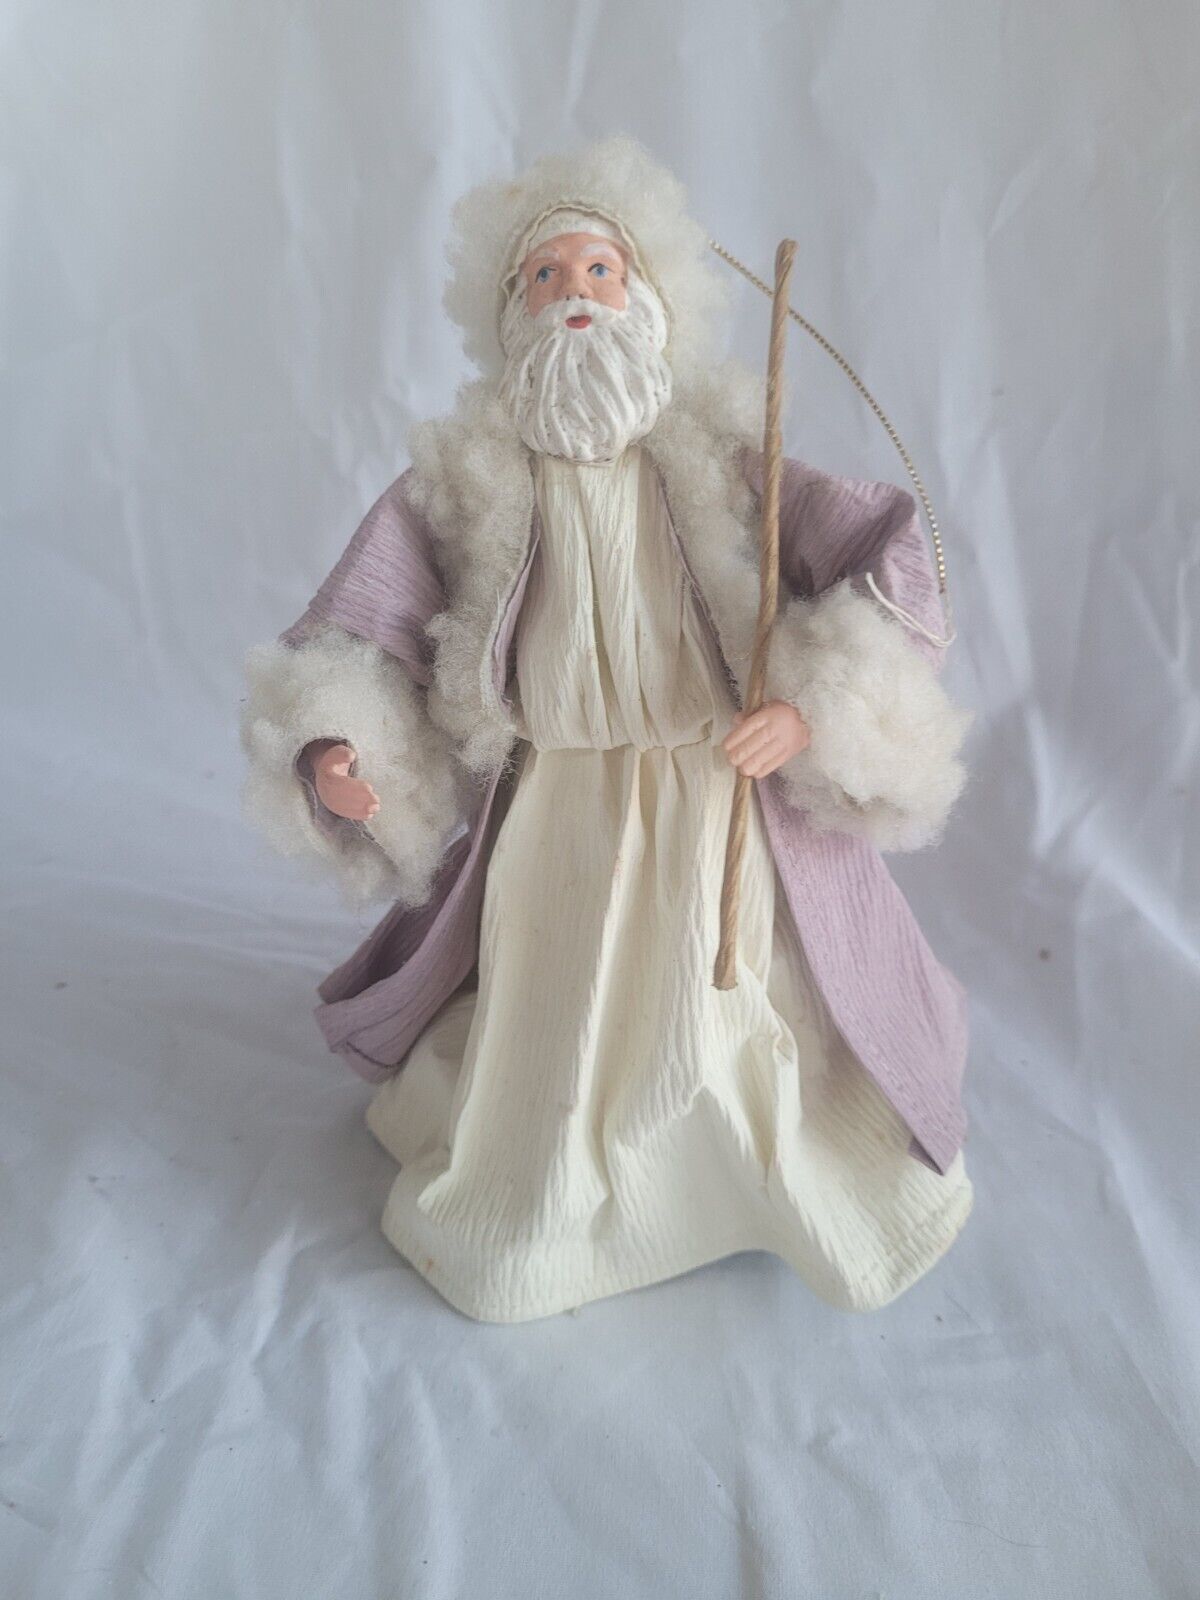 Vintage Father Christmas Figurine Wearing a Lavender Cloak